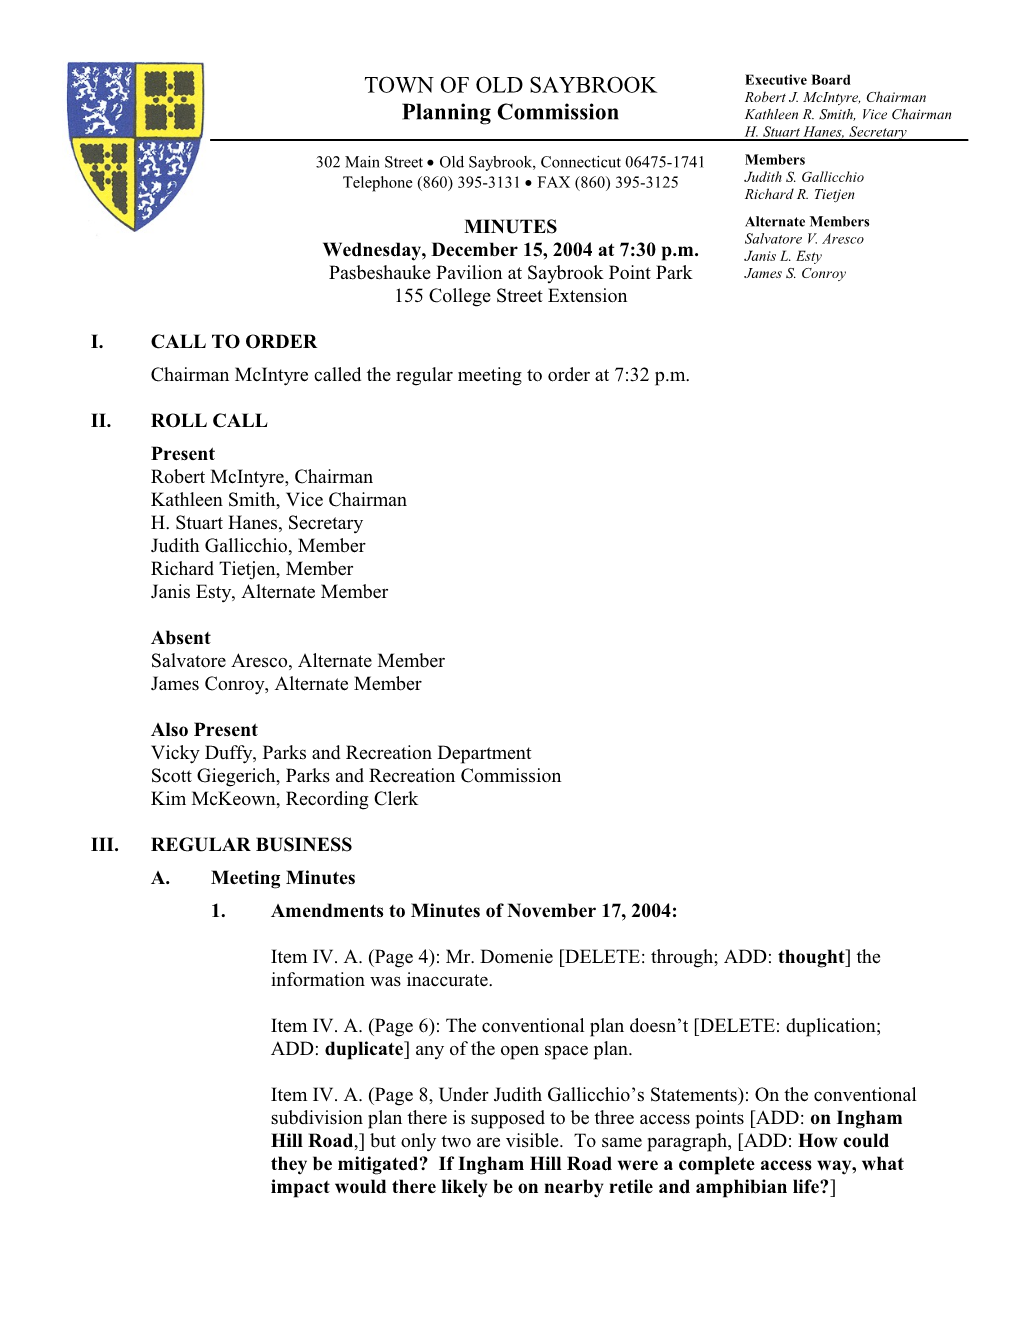 Old Saybrook Planning Commission Meeting Agenda December 15, 2004